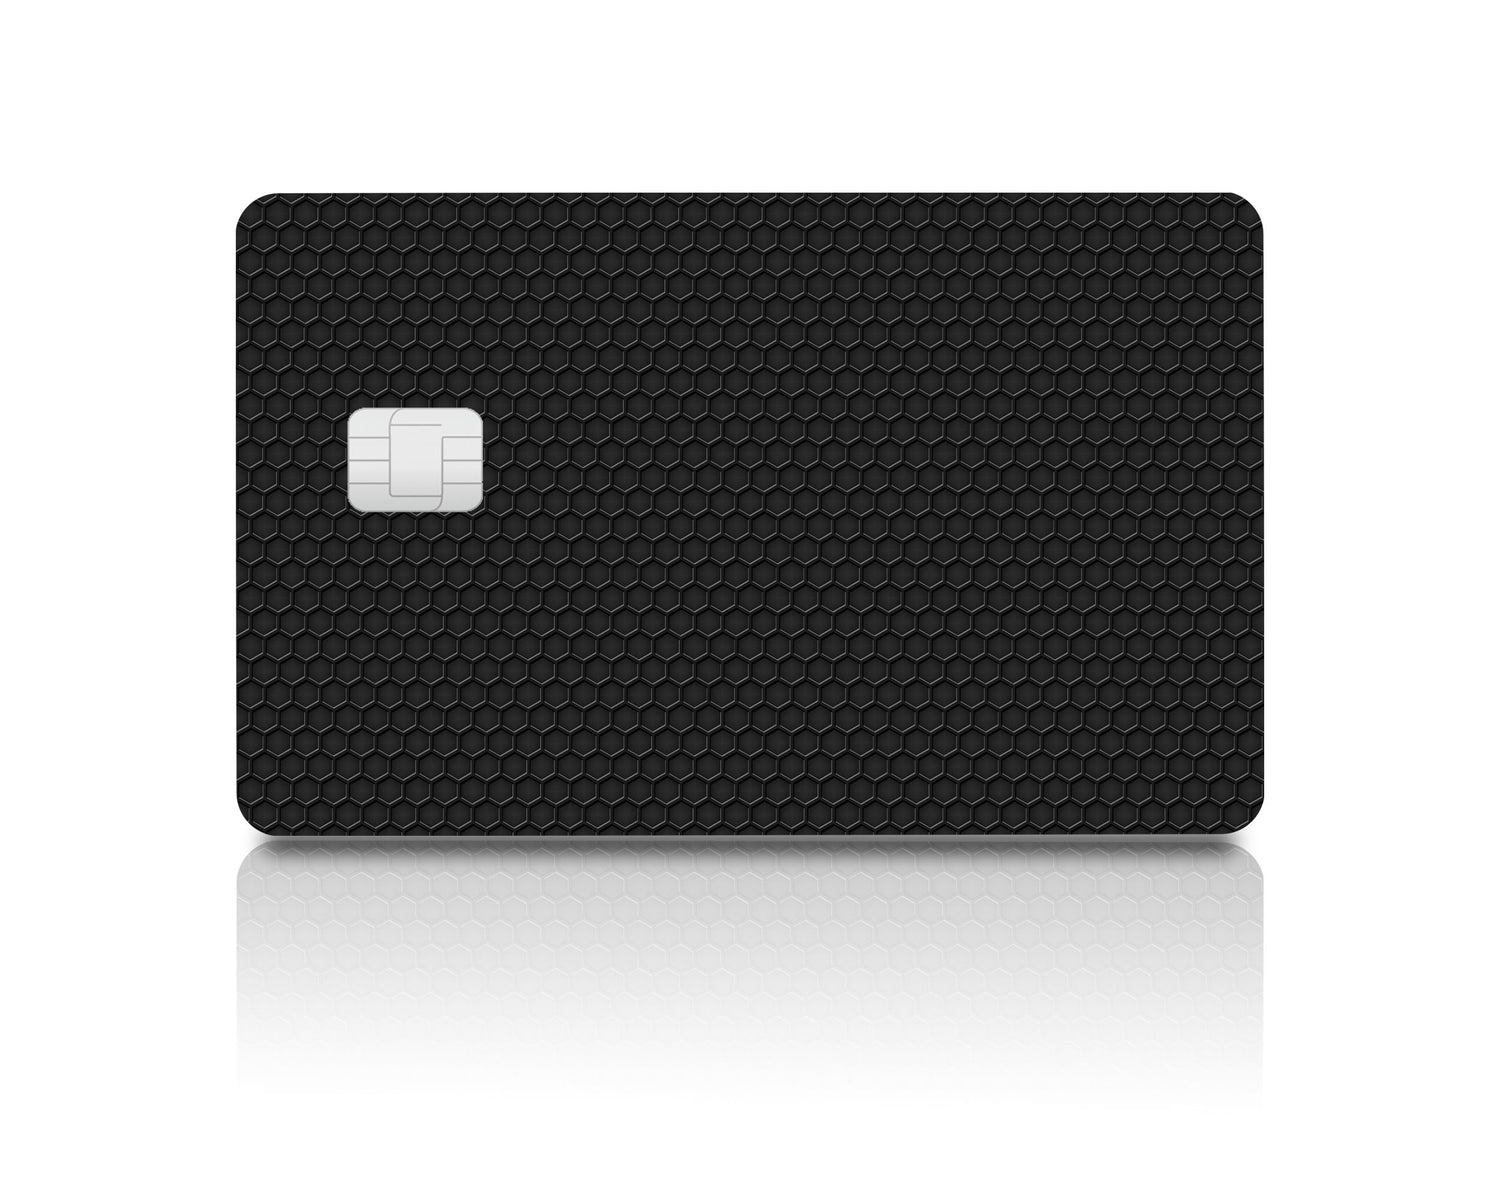 Blockbuster Credit Card Skin